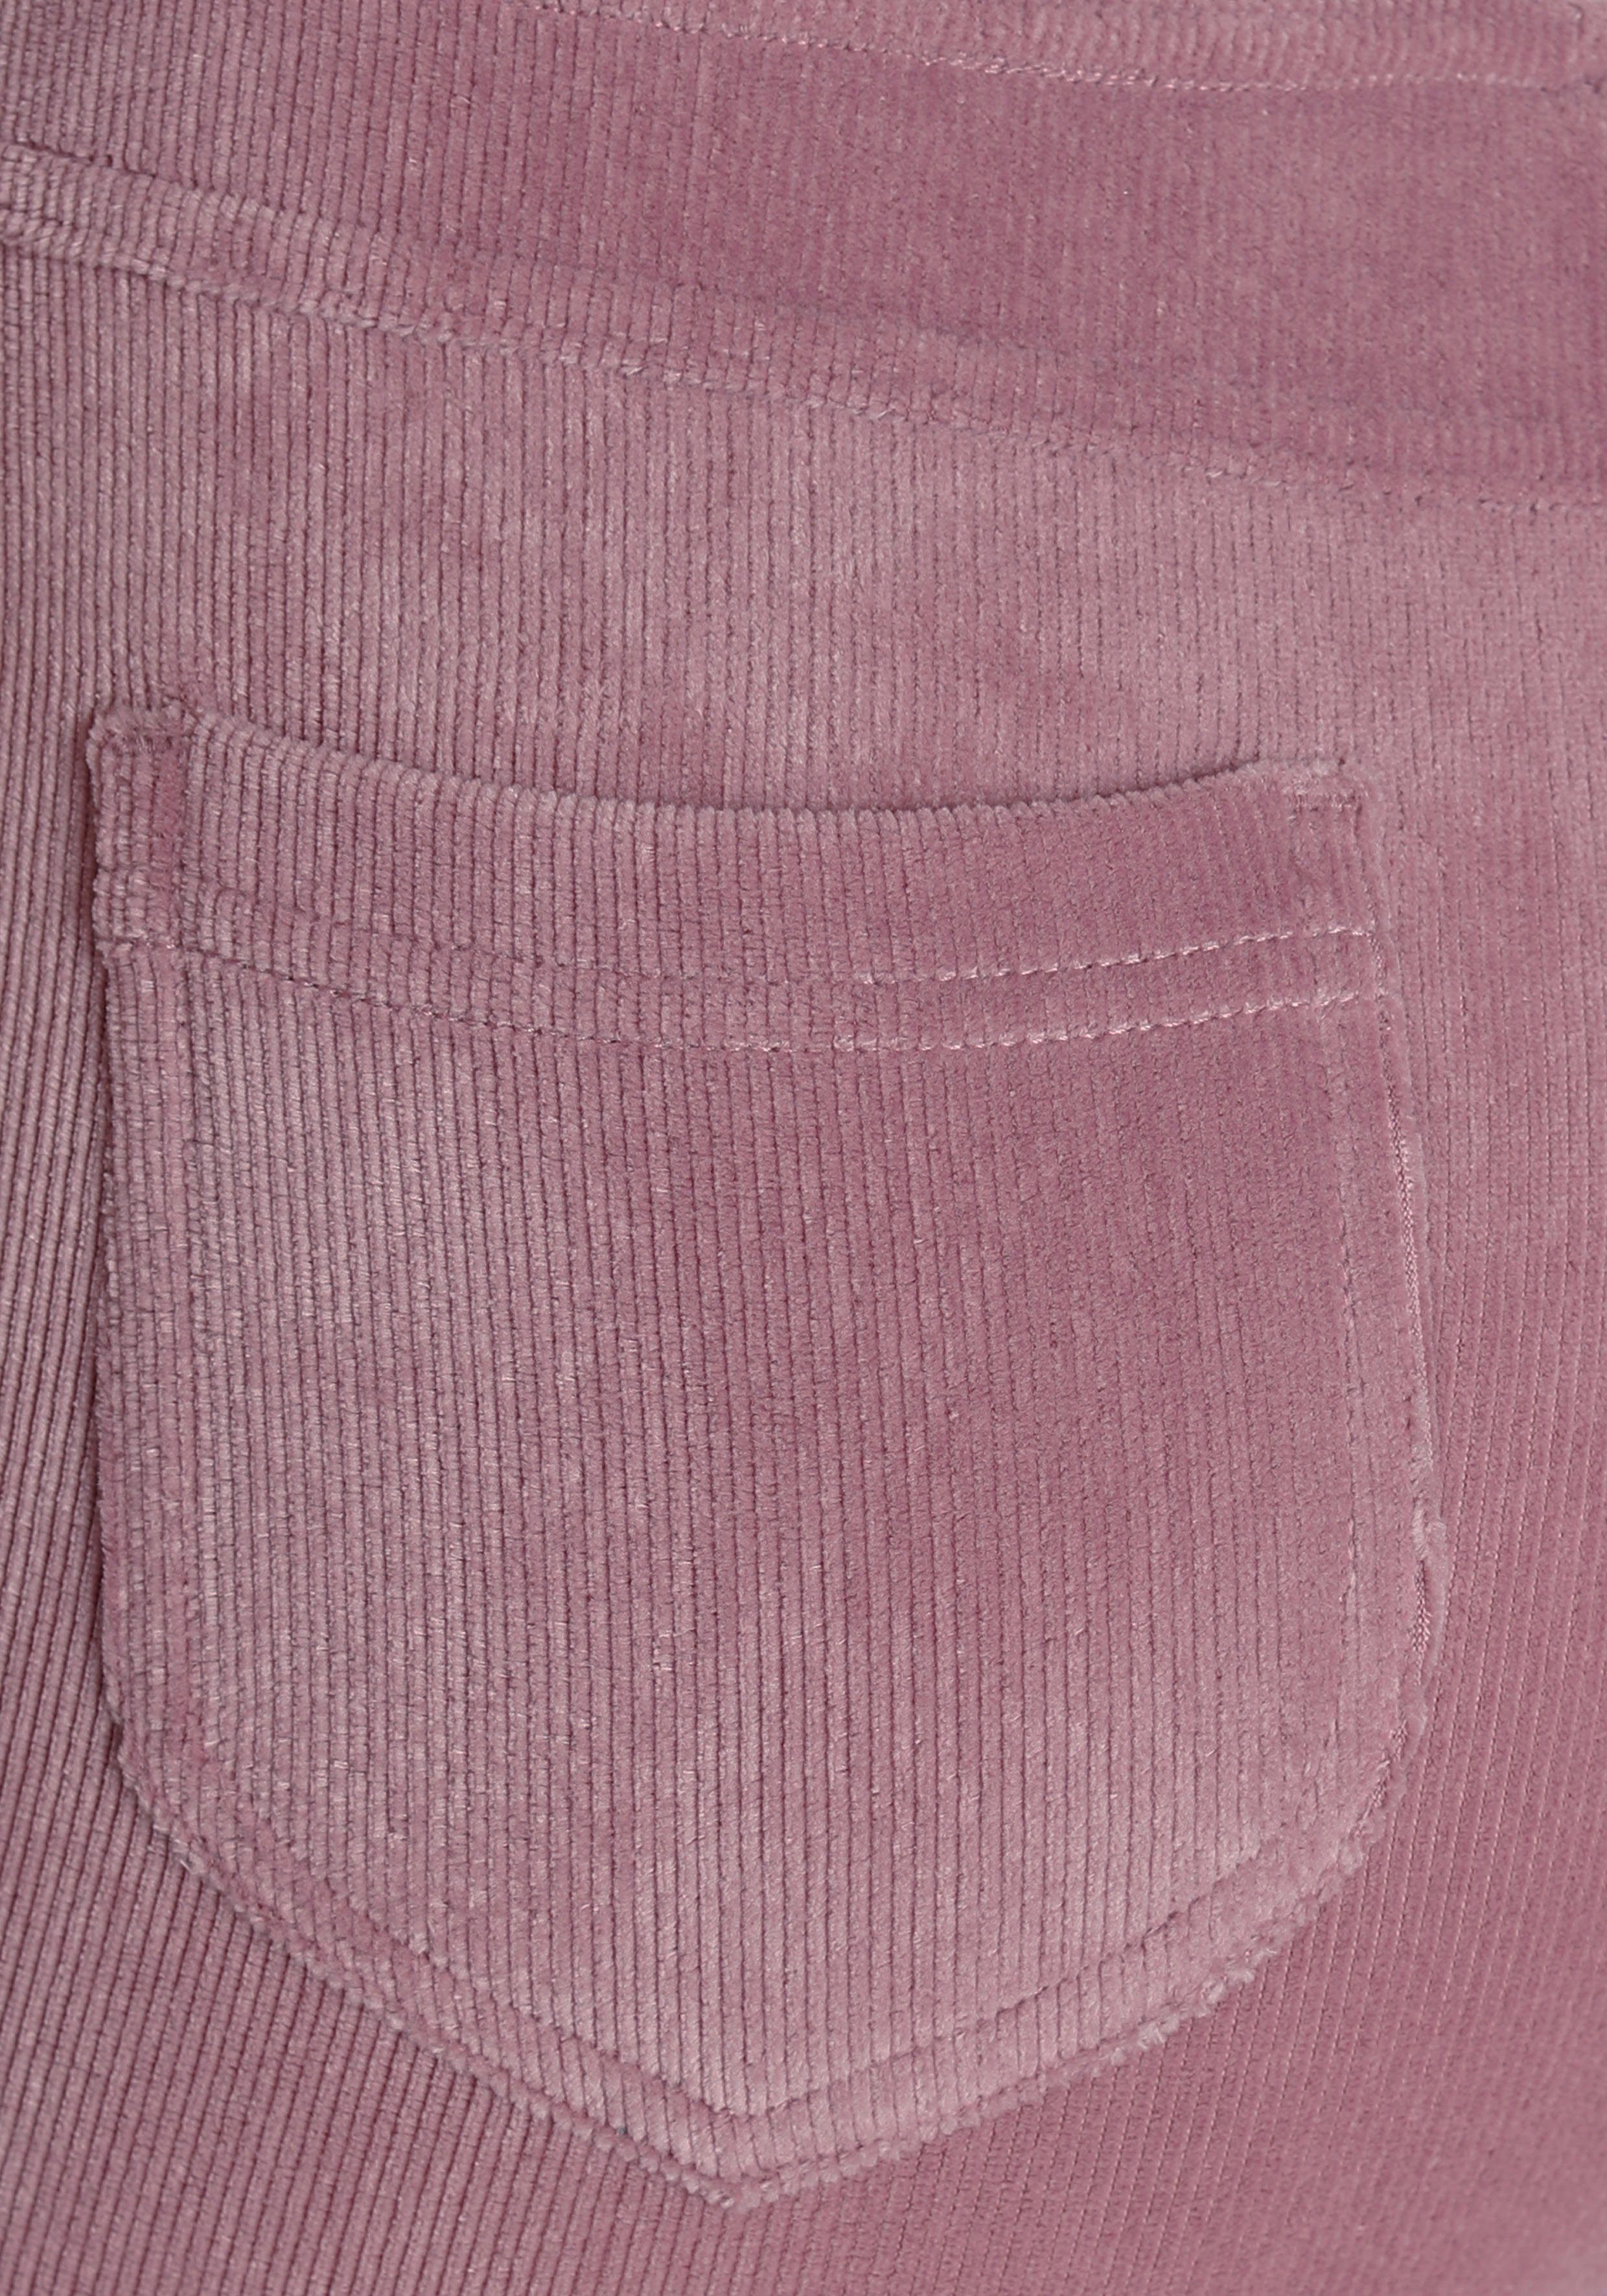 Loungewear weichem Cord-Optik, aus in Jazzpants LASCANA rosa Material